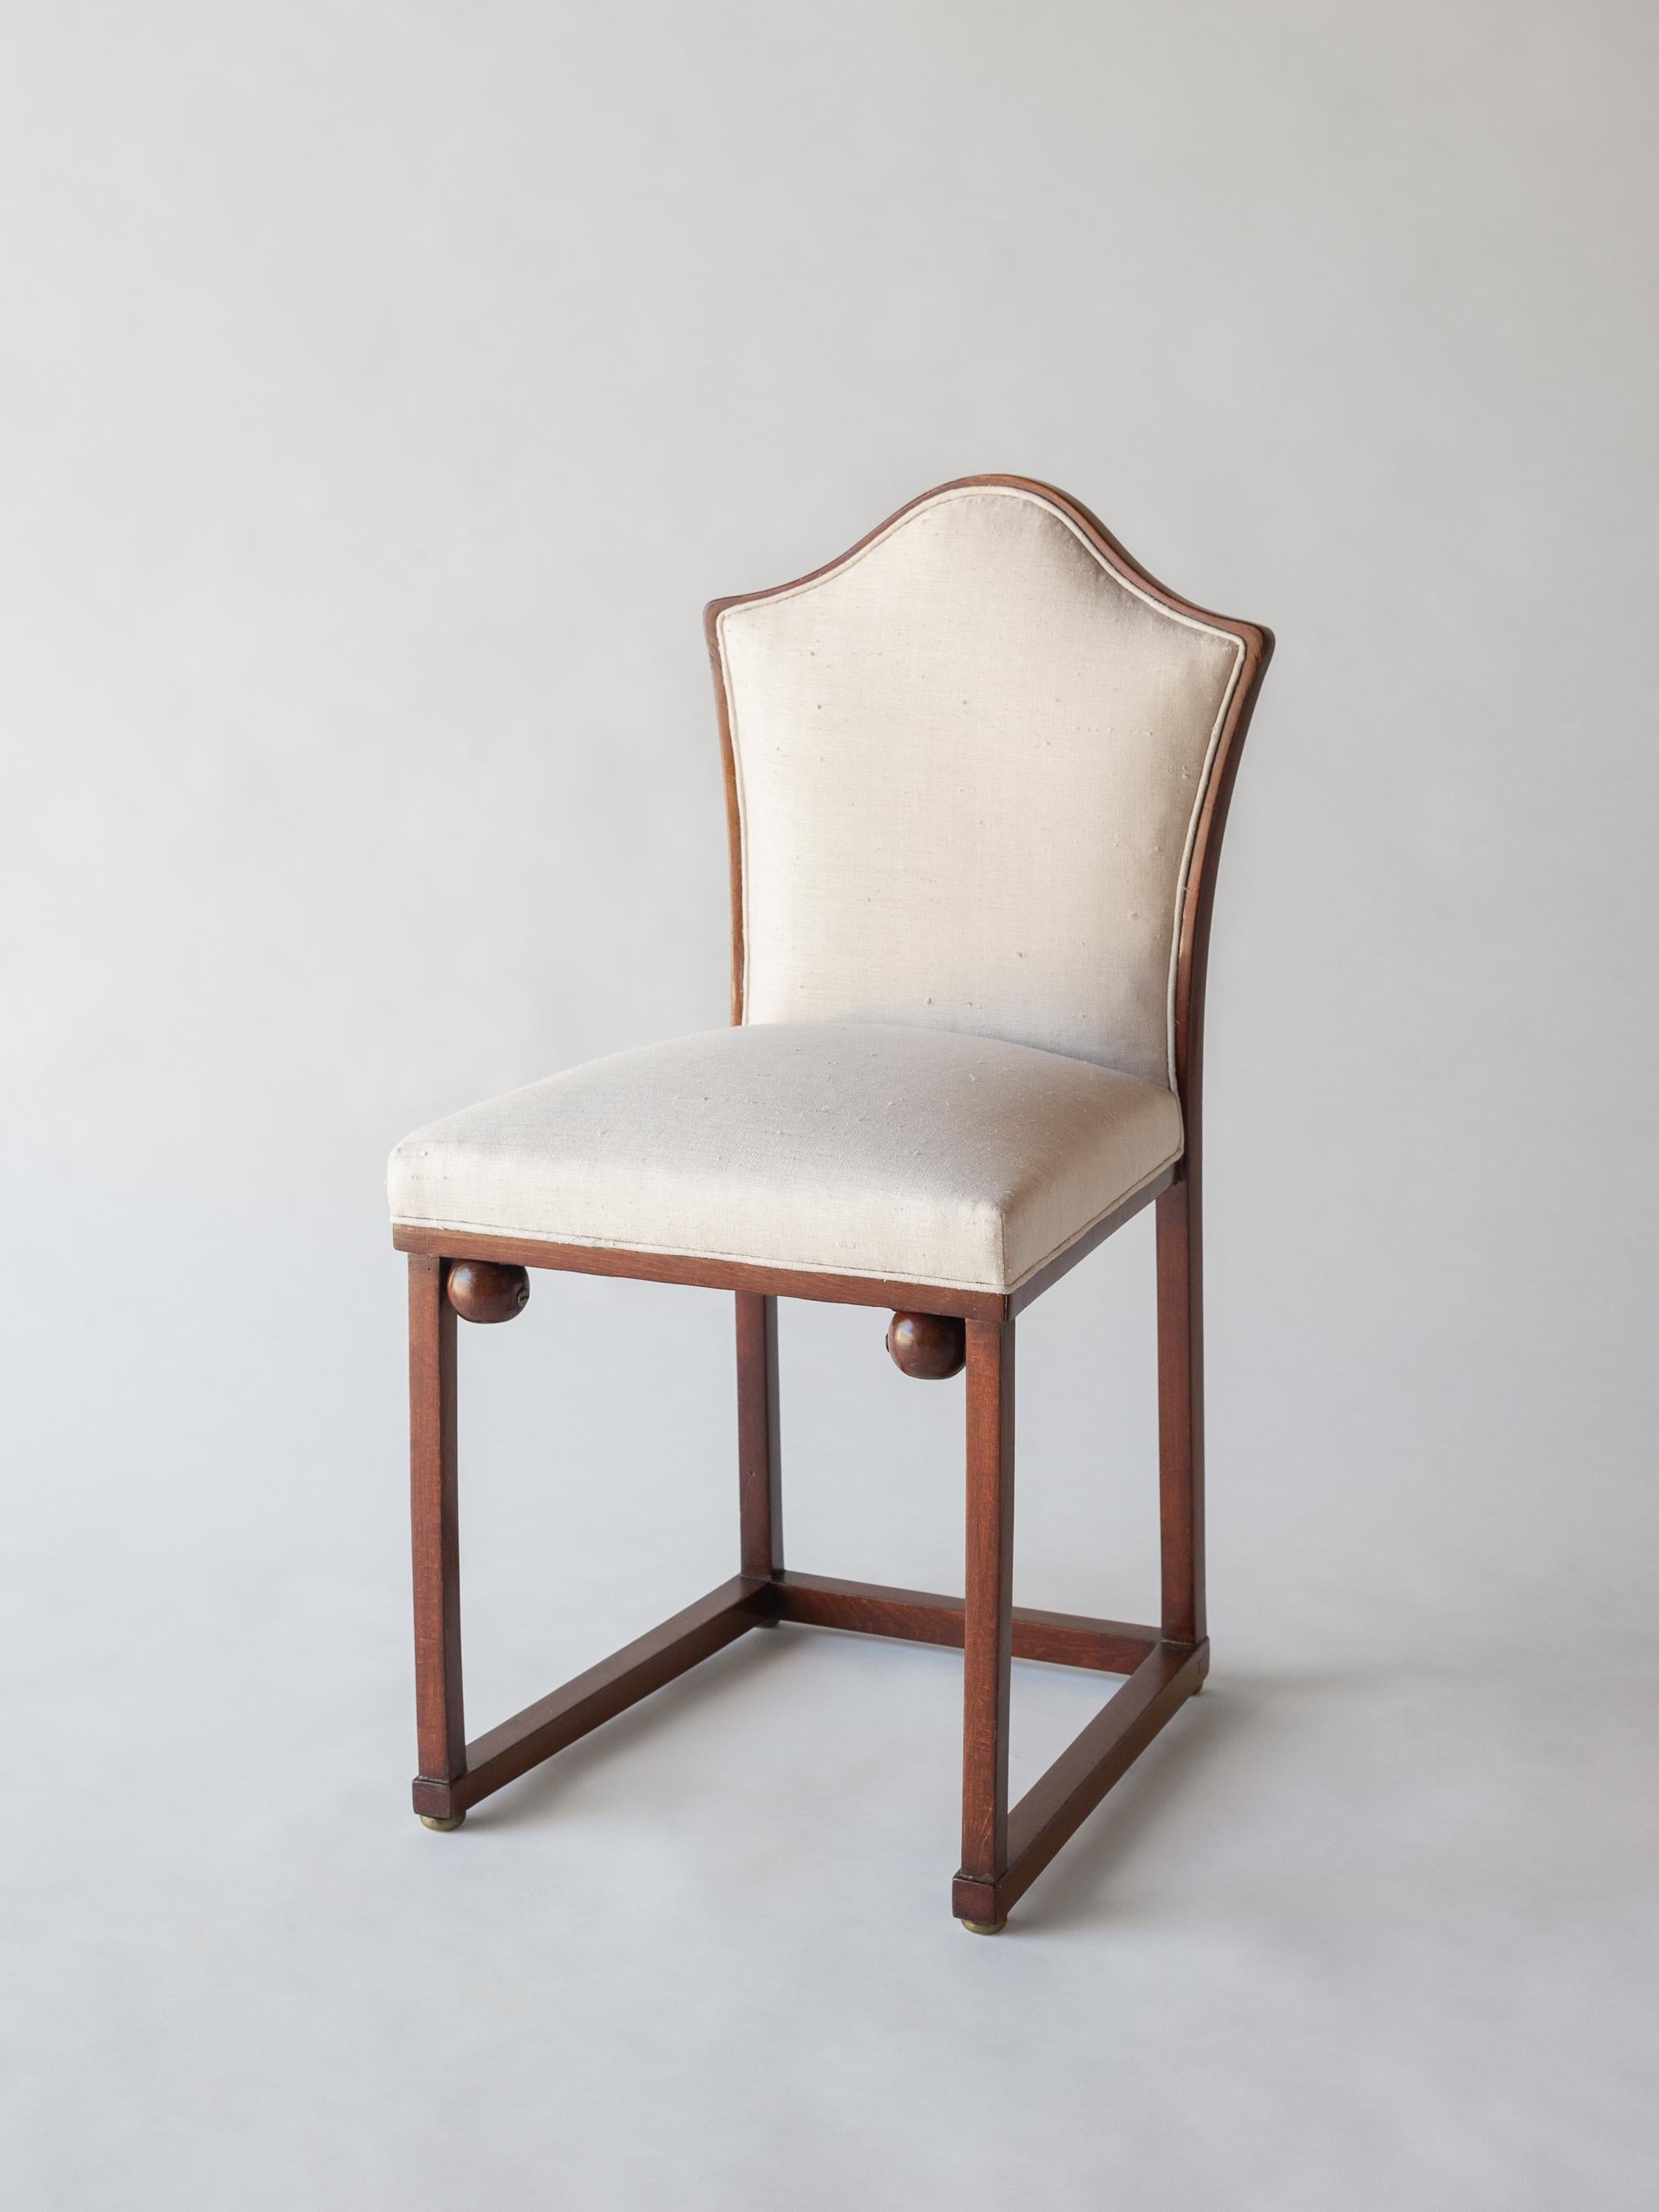 Vienna Secession Josef Hoffmann 'Attrib.' Upholstered Side Chair, C. 1910